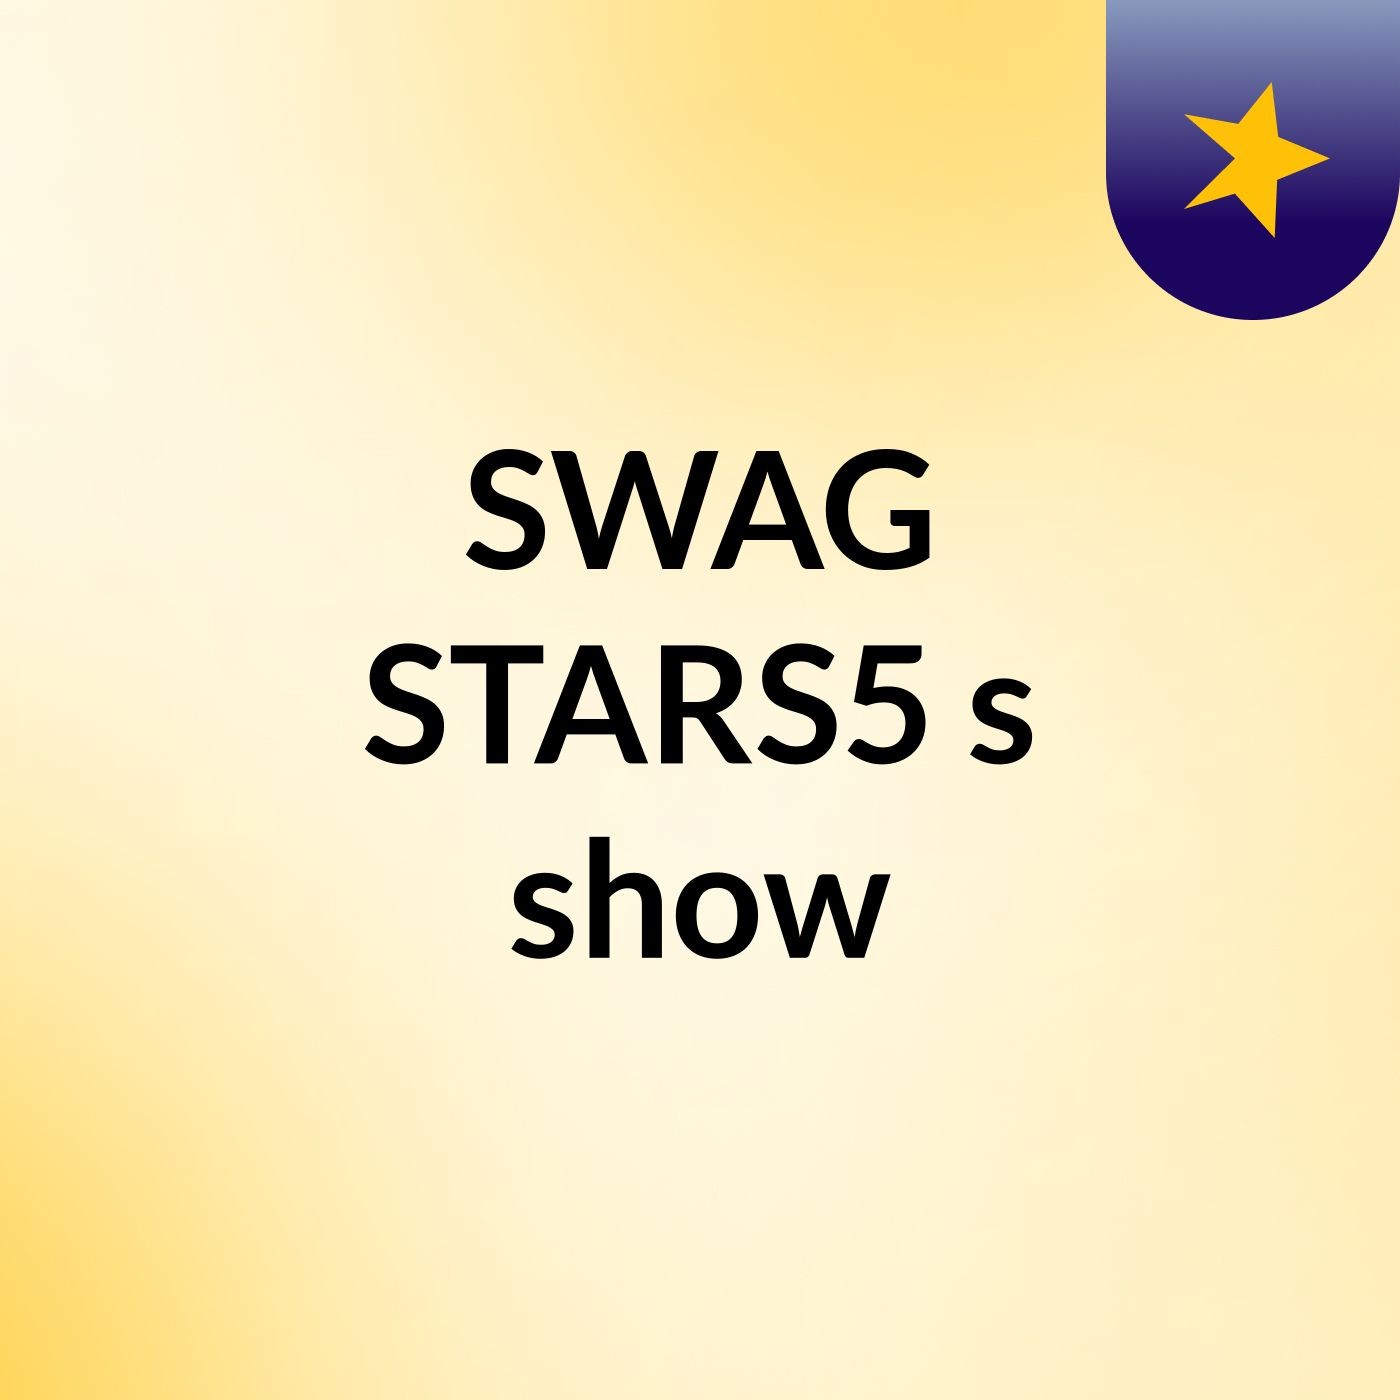 SWAG STARS5's show